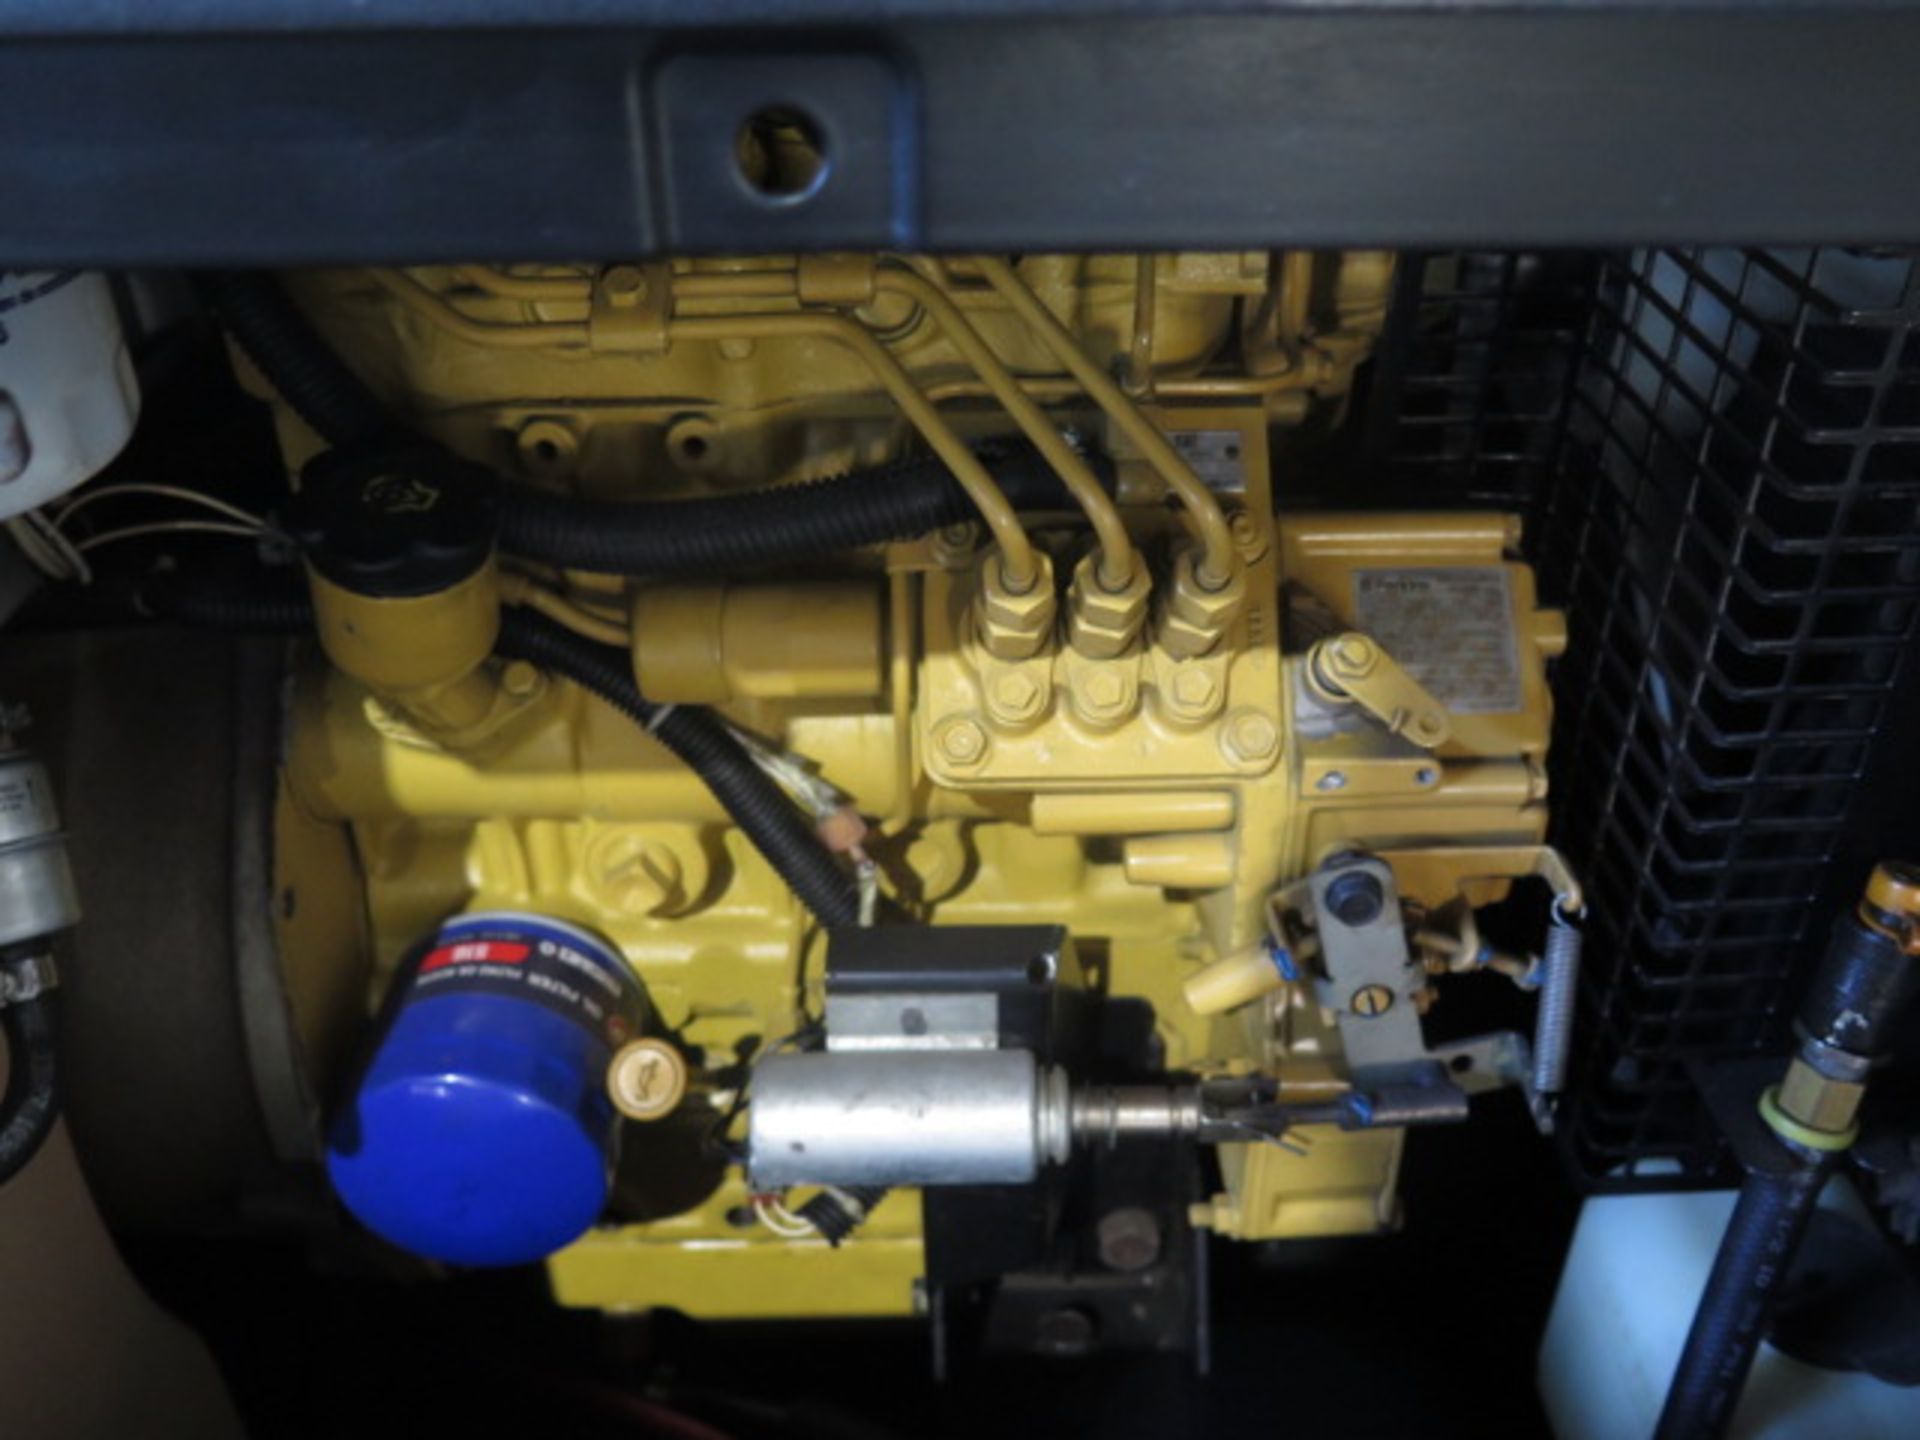 Miller Pro 300 Diesel Powered Welding Gen w/ Cat 21.7Hp Diesel Engine, TIG/Wire/Stick, SOLD AS IS - Image 5 of 14